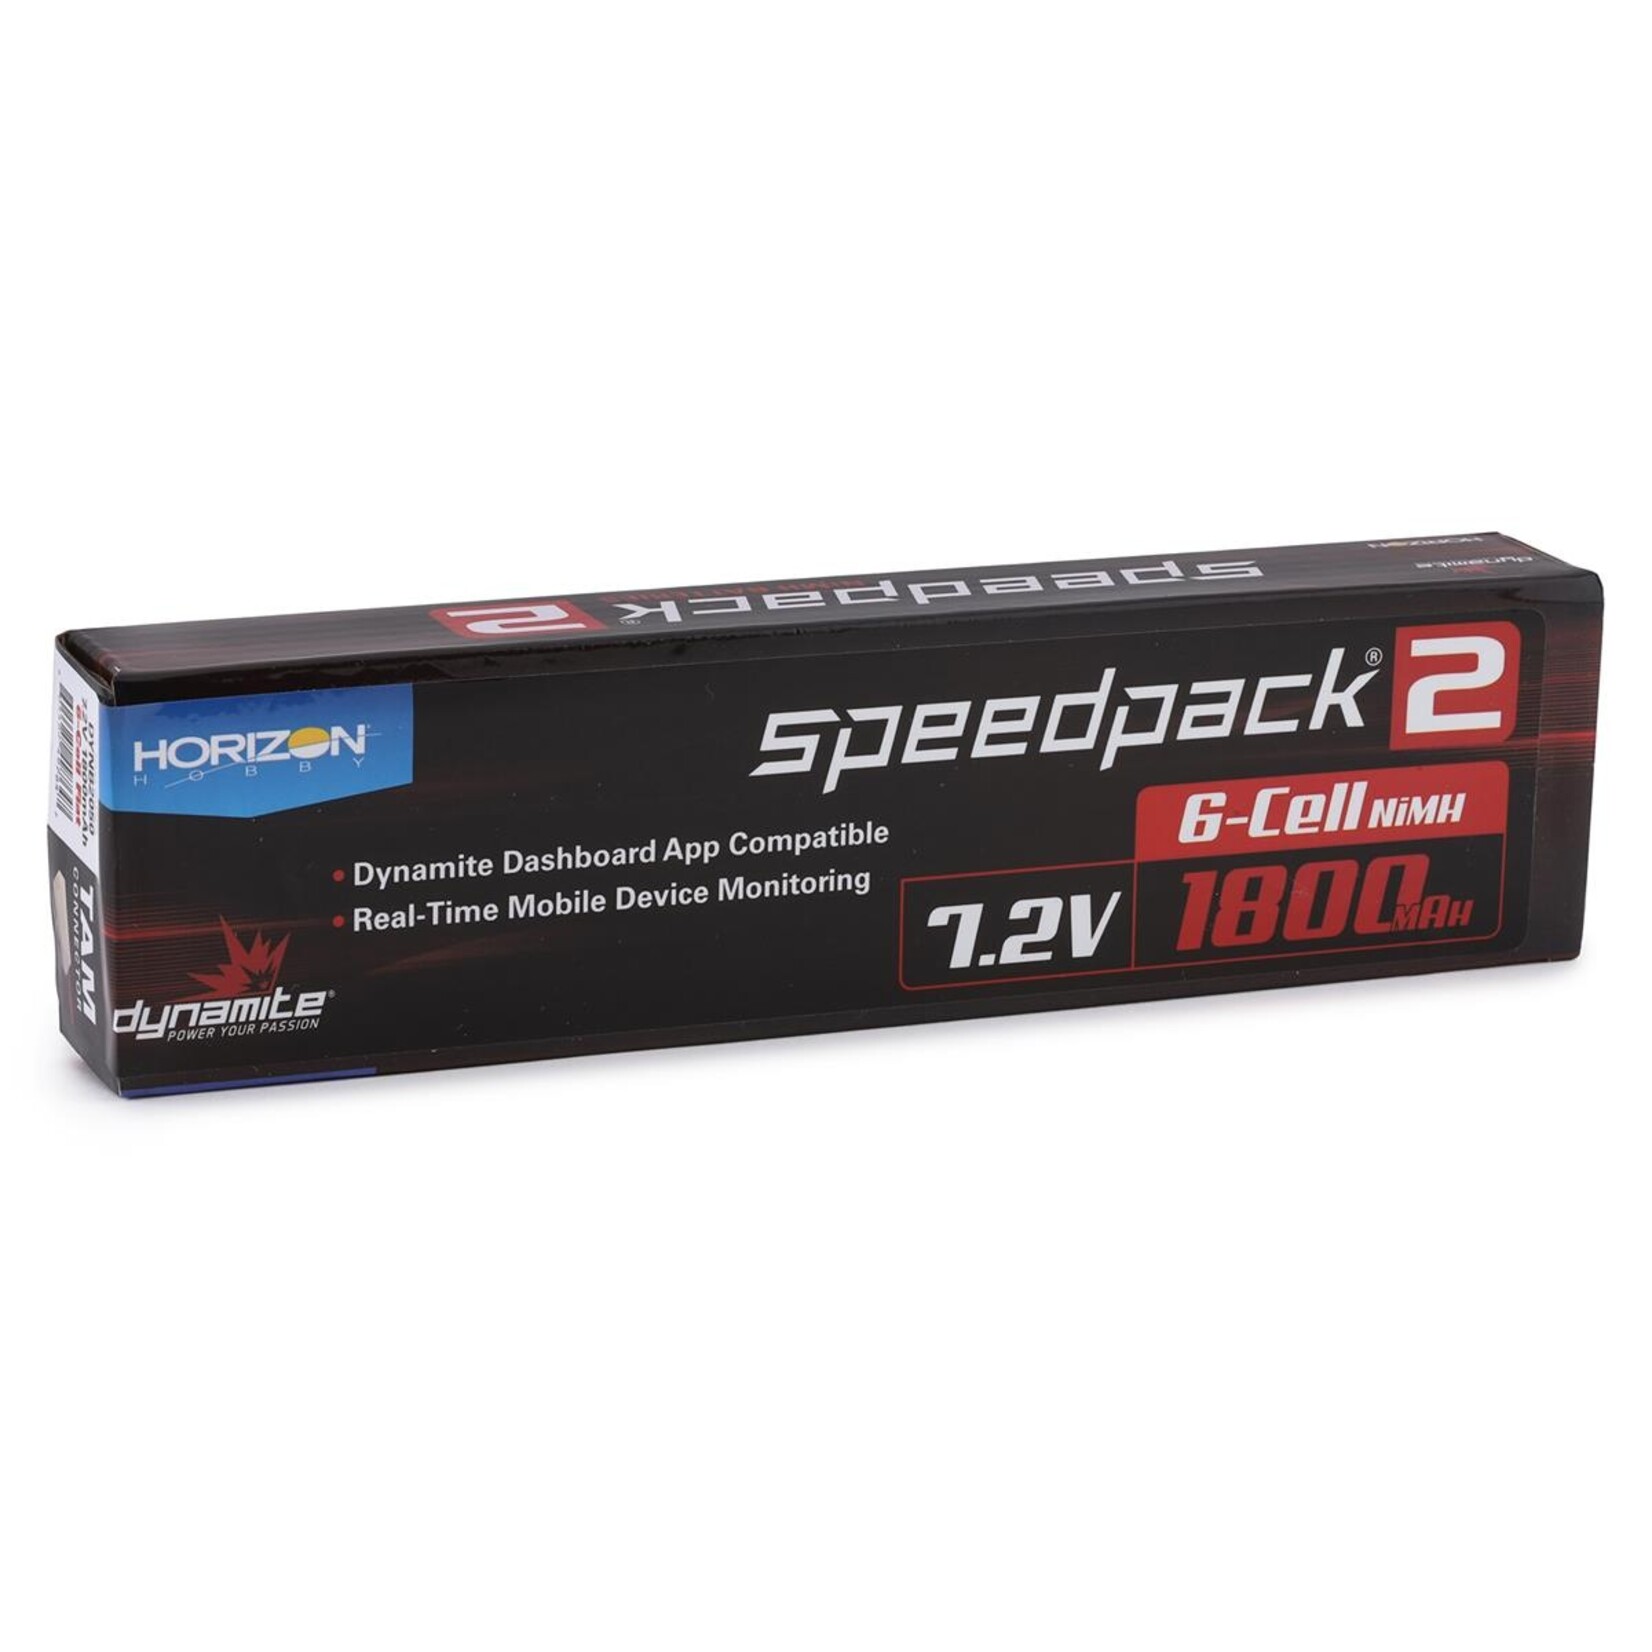 Dynamite Dynamite Speedpack2 6-Cell NiMH Flat Battery Pack w/Tamiya (7.2V/1800mAh) #DYNB2050